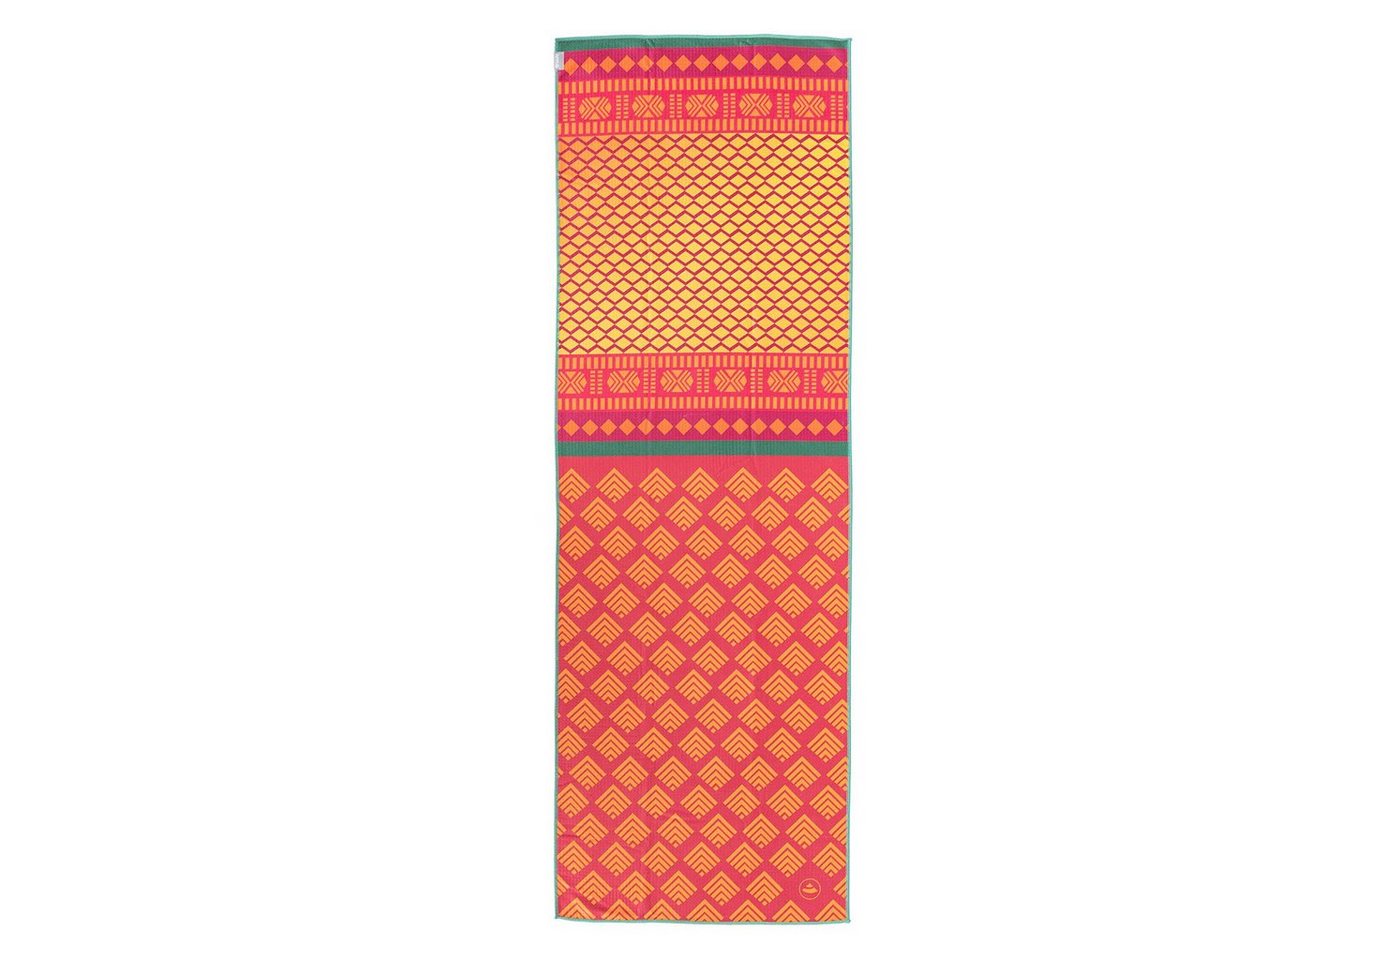 bodhi Sporthandtuch Yogatuch GRIP² Yoga Towel Safari Sari von bodhi